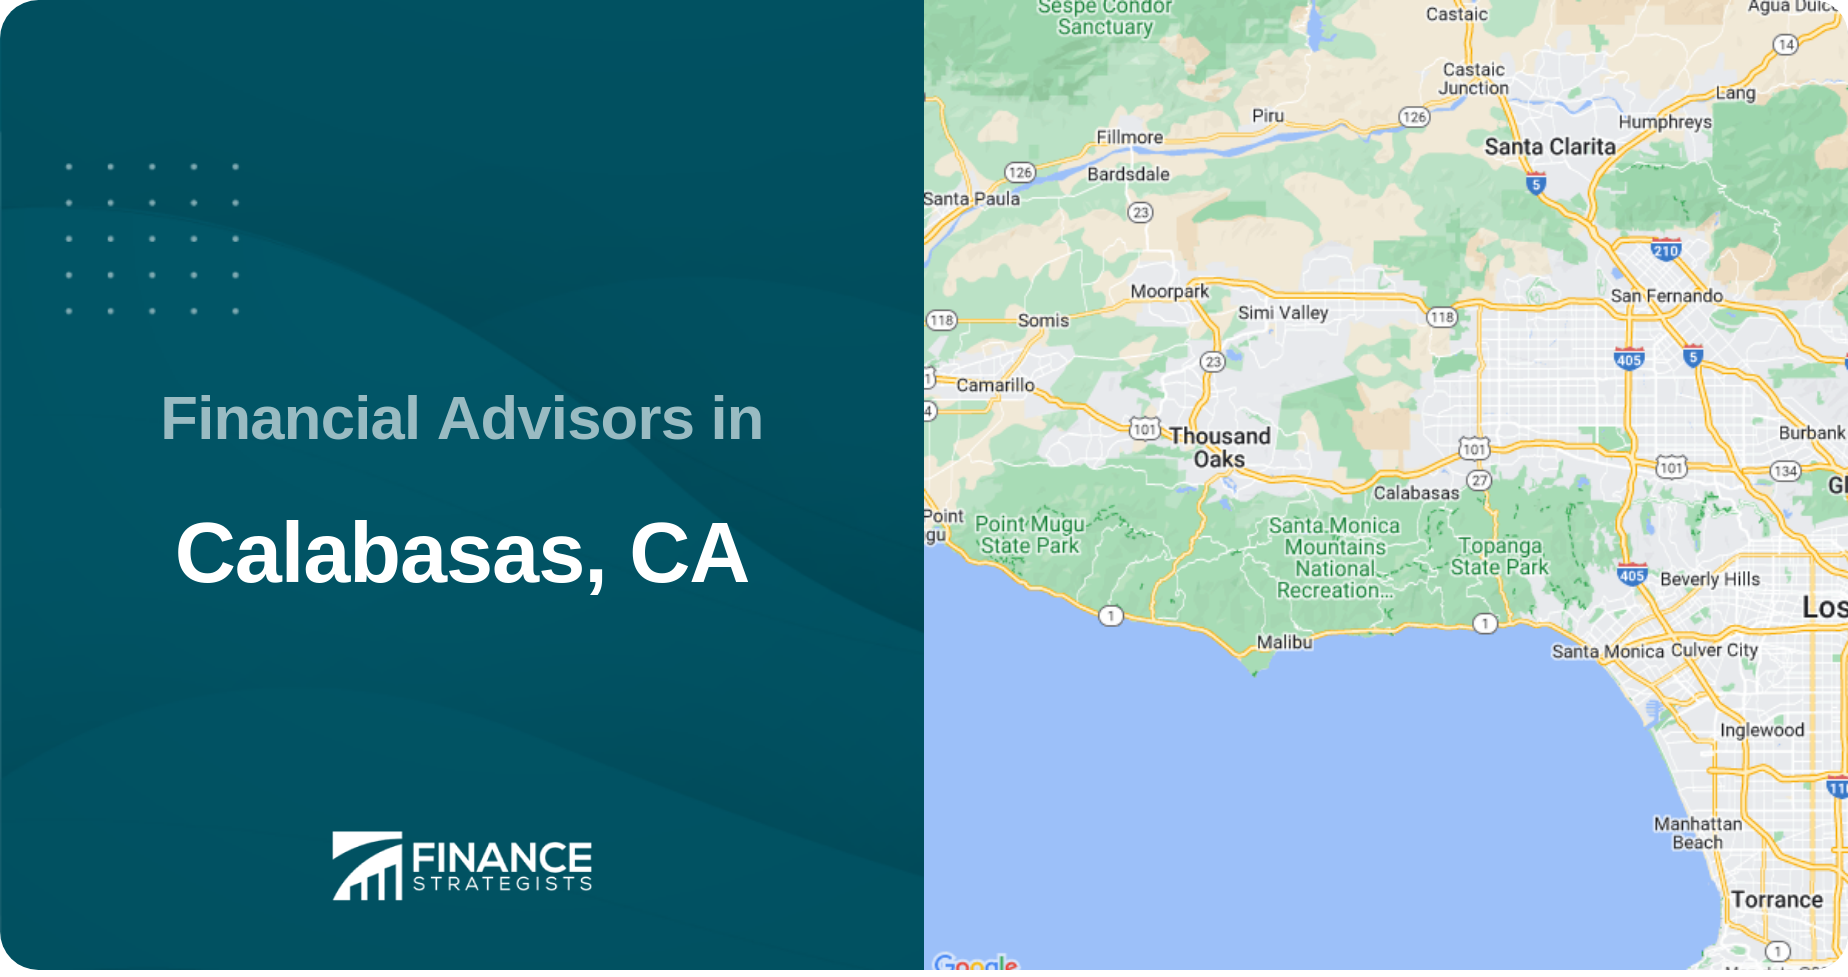 Financial Advisors in Calabasas, CA